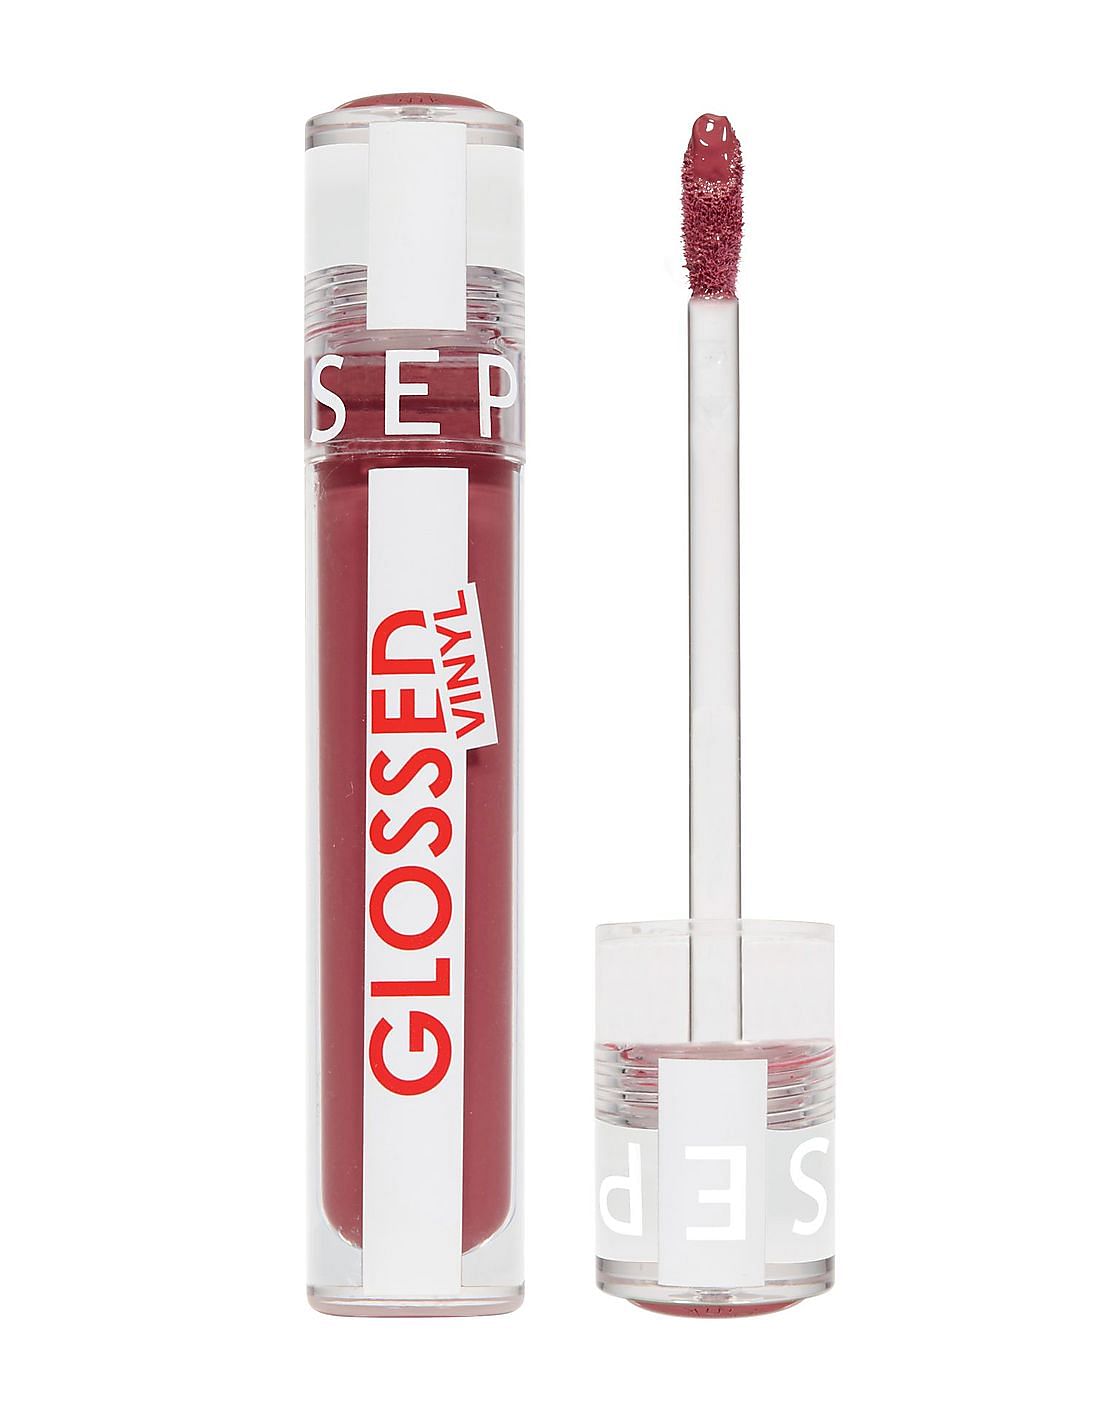 Glossed Lip Gloss ❘ SEPHORA COLLECTION ≡ SEPHORA